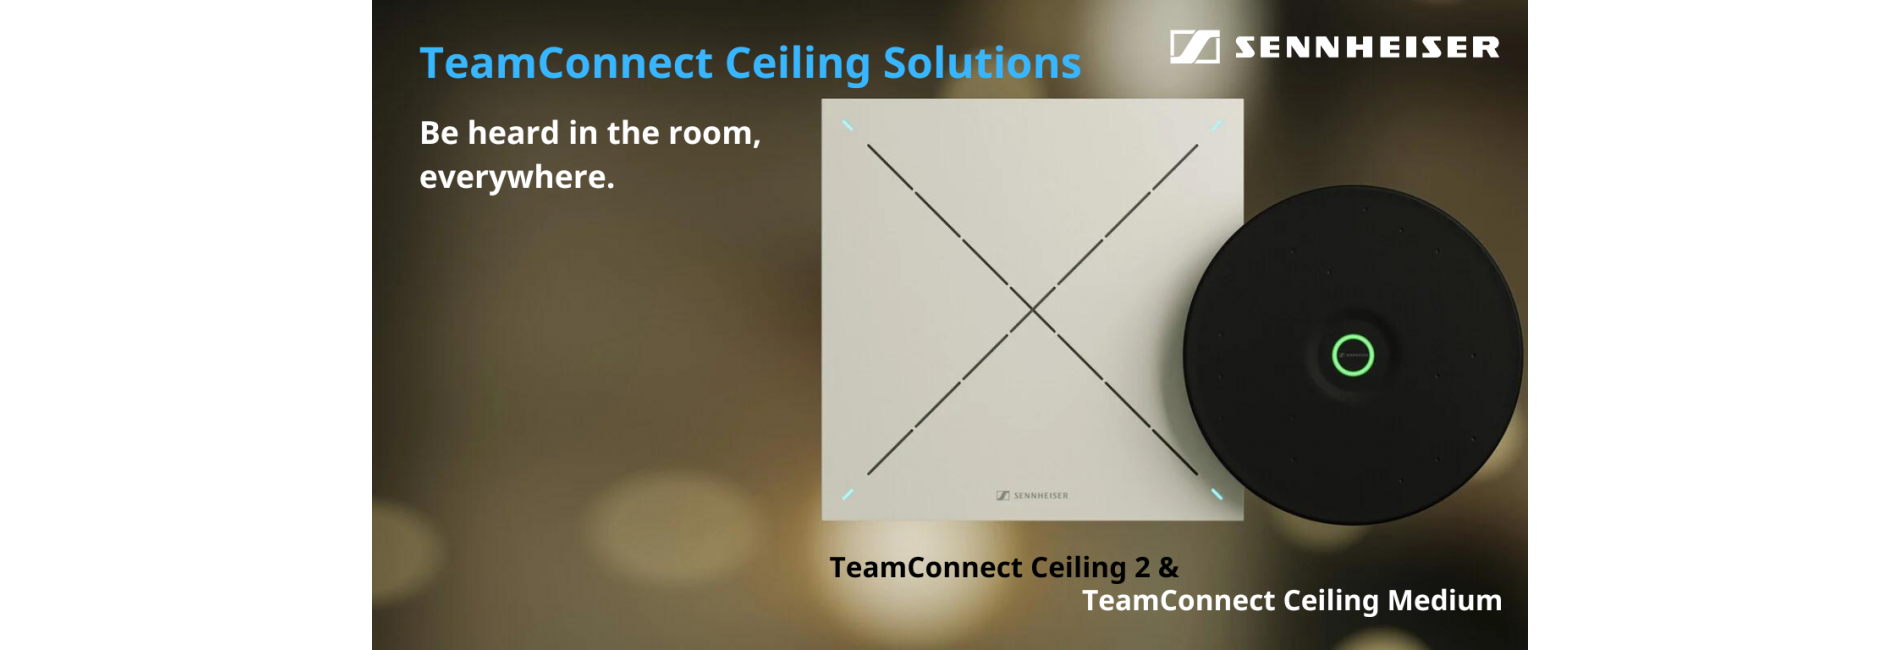 Sennheiser teamconnect-ceiling-solutions